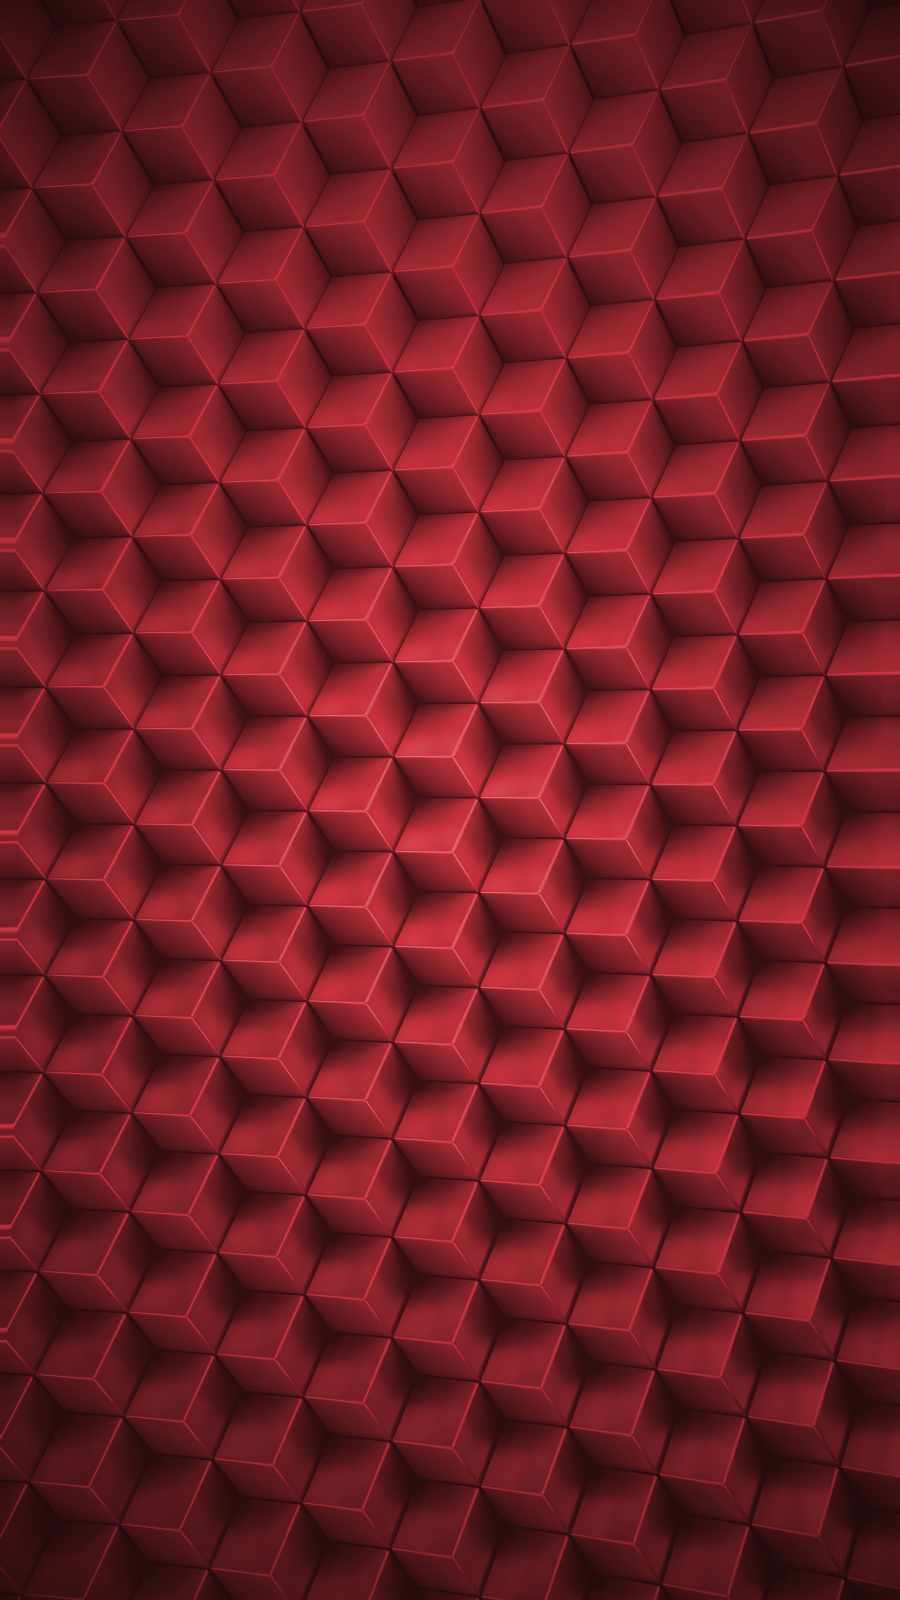 3D Cubes iPhone Wallpaper